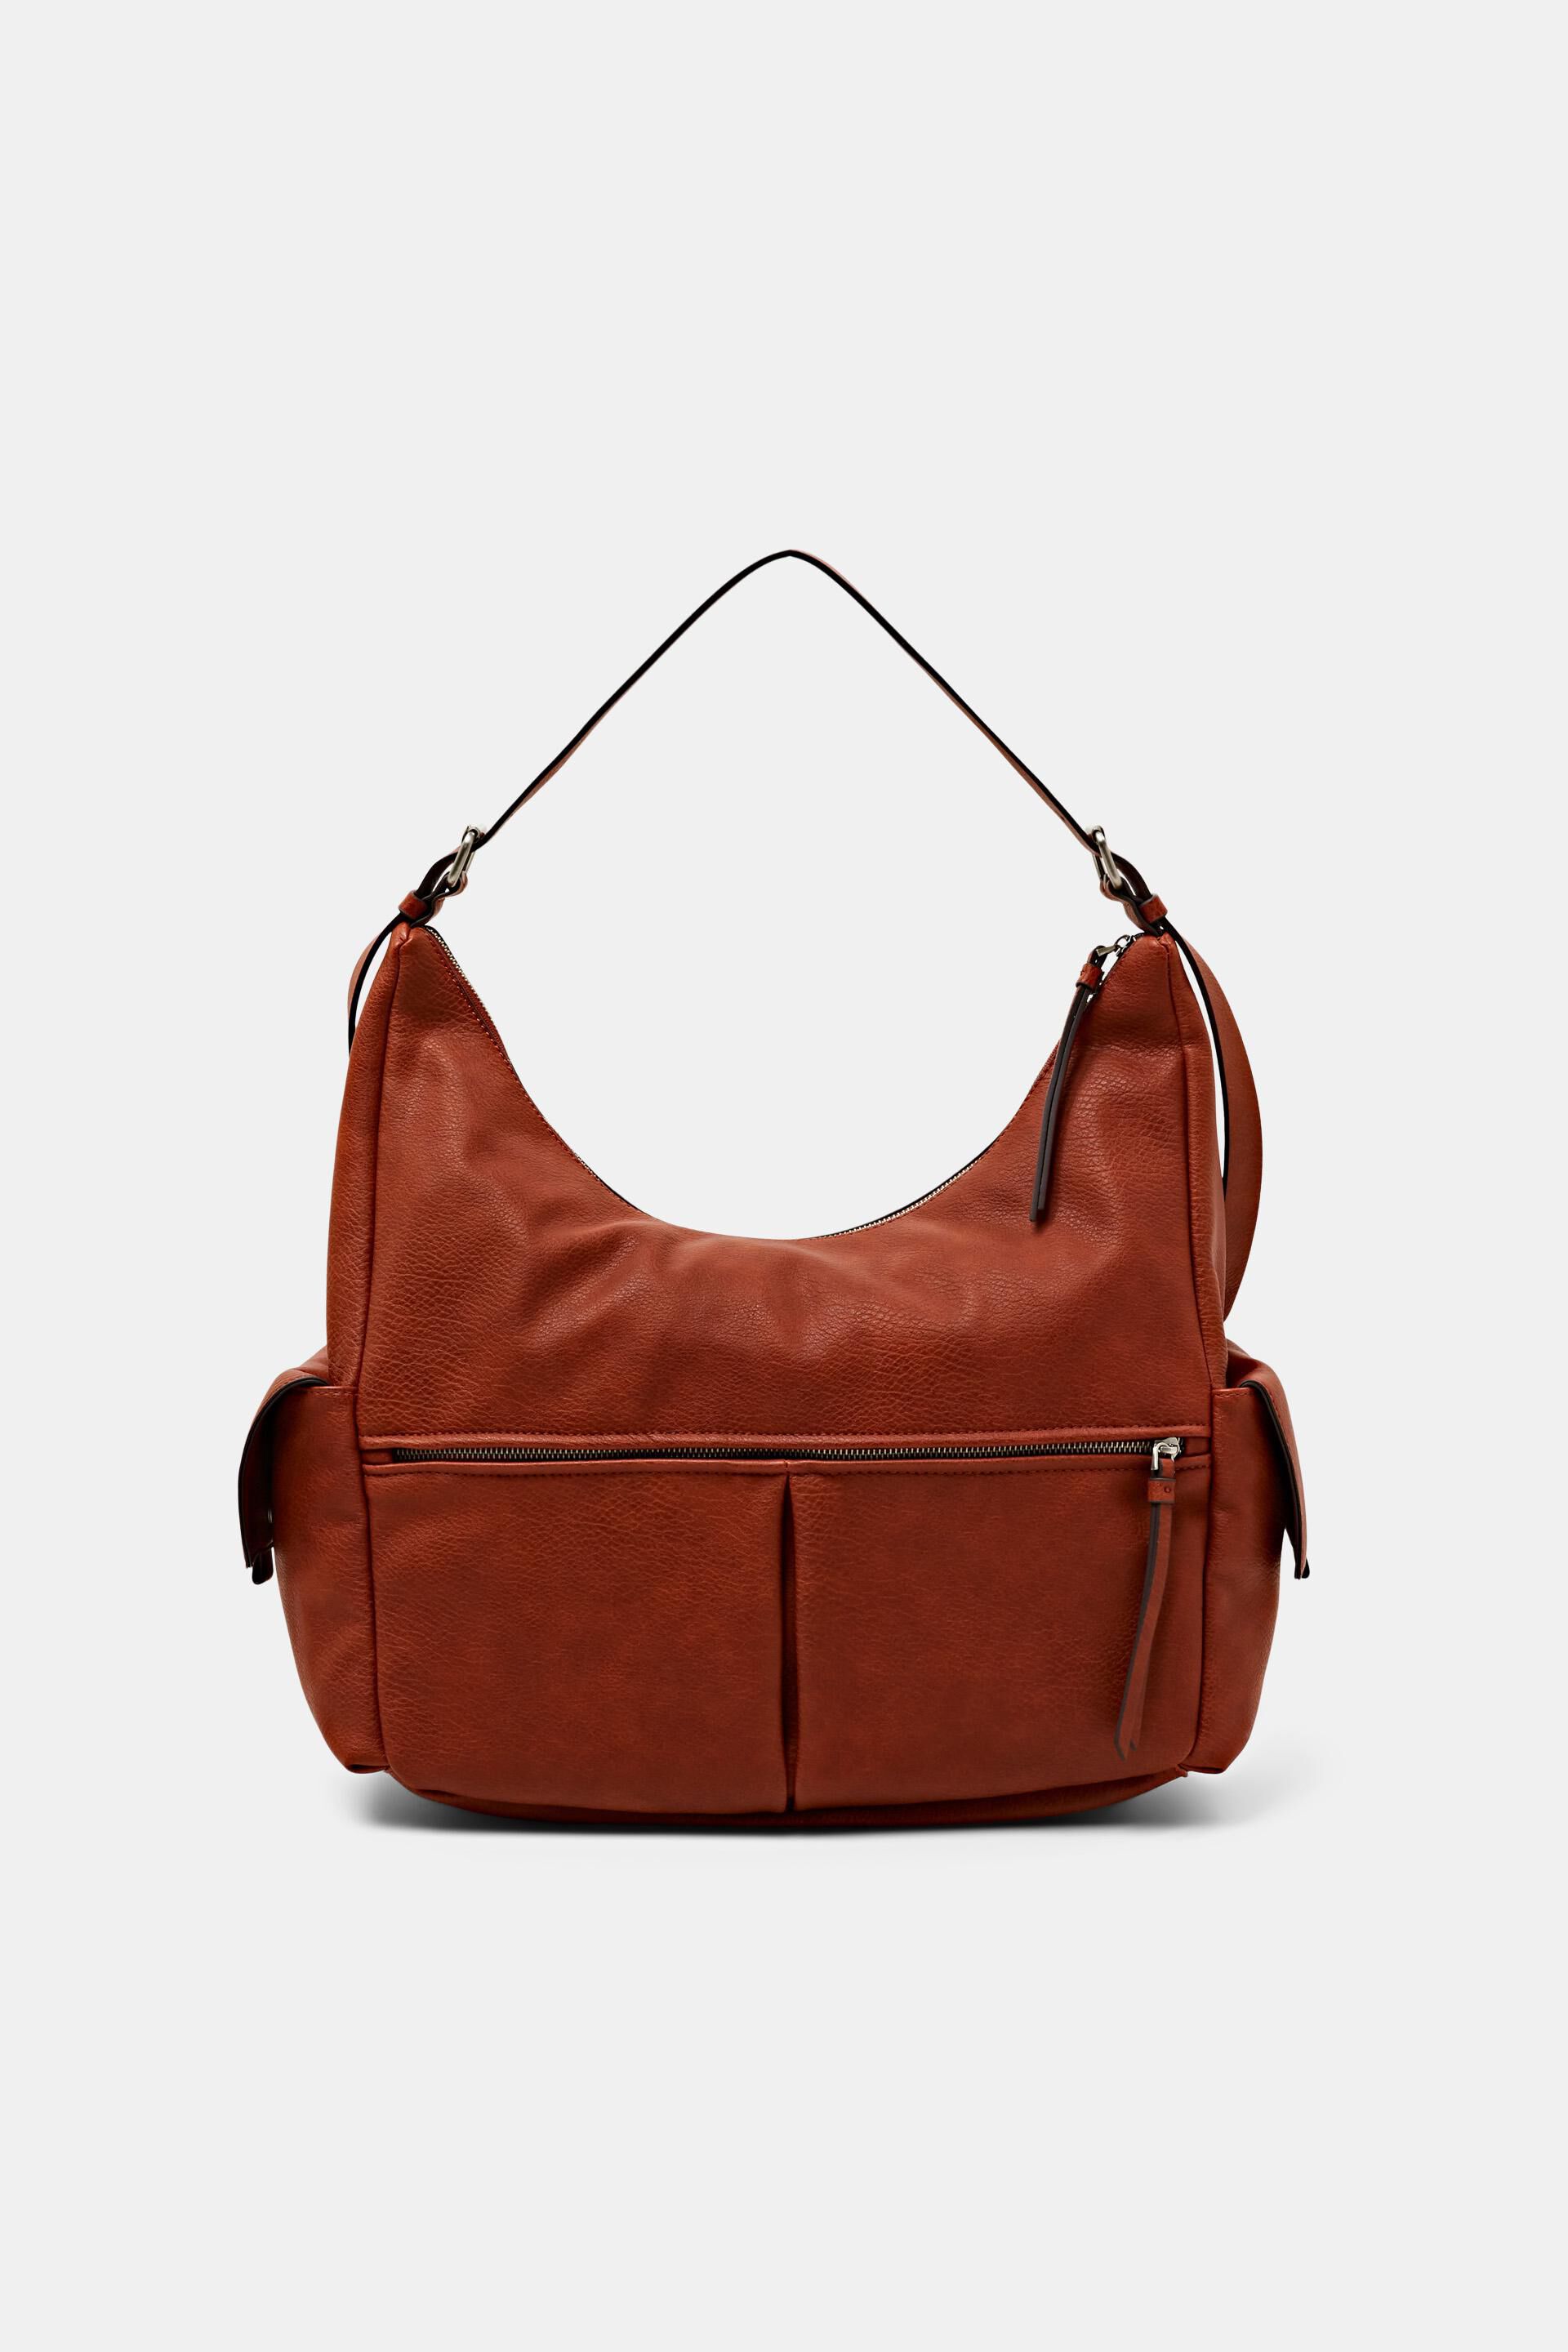 Esprit Online Store Bags